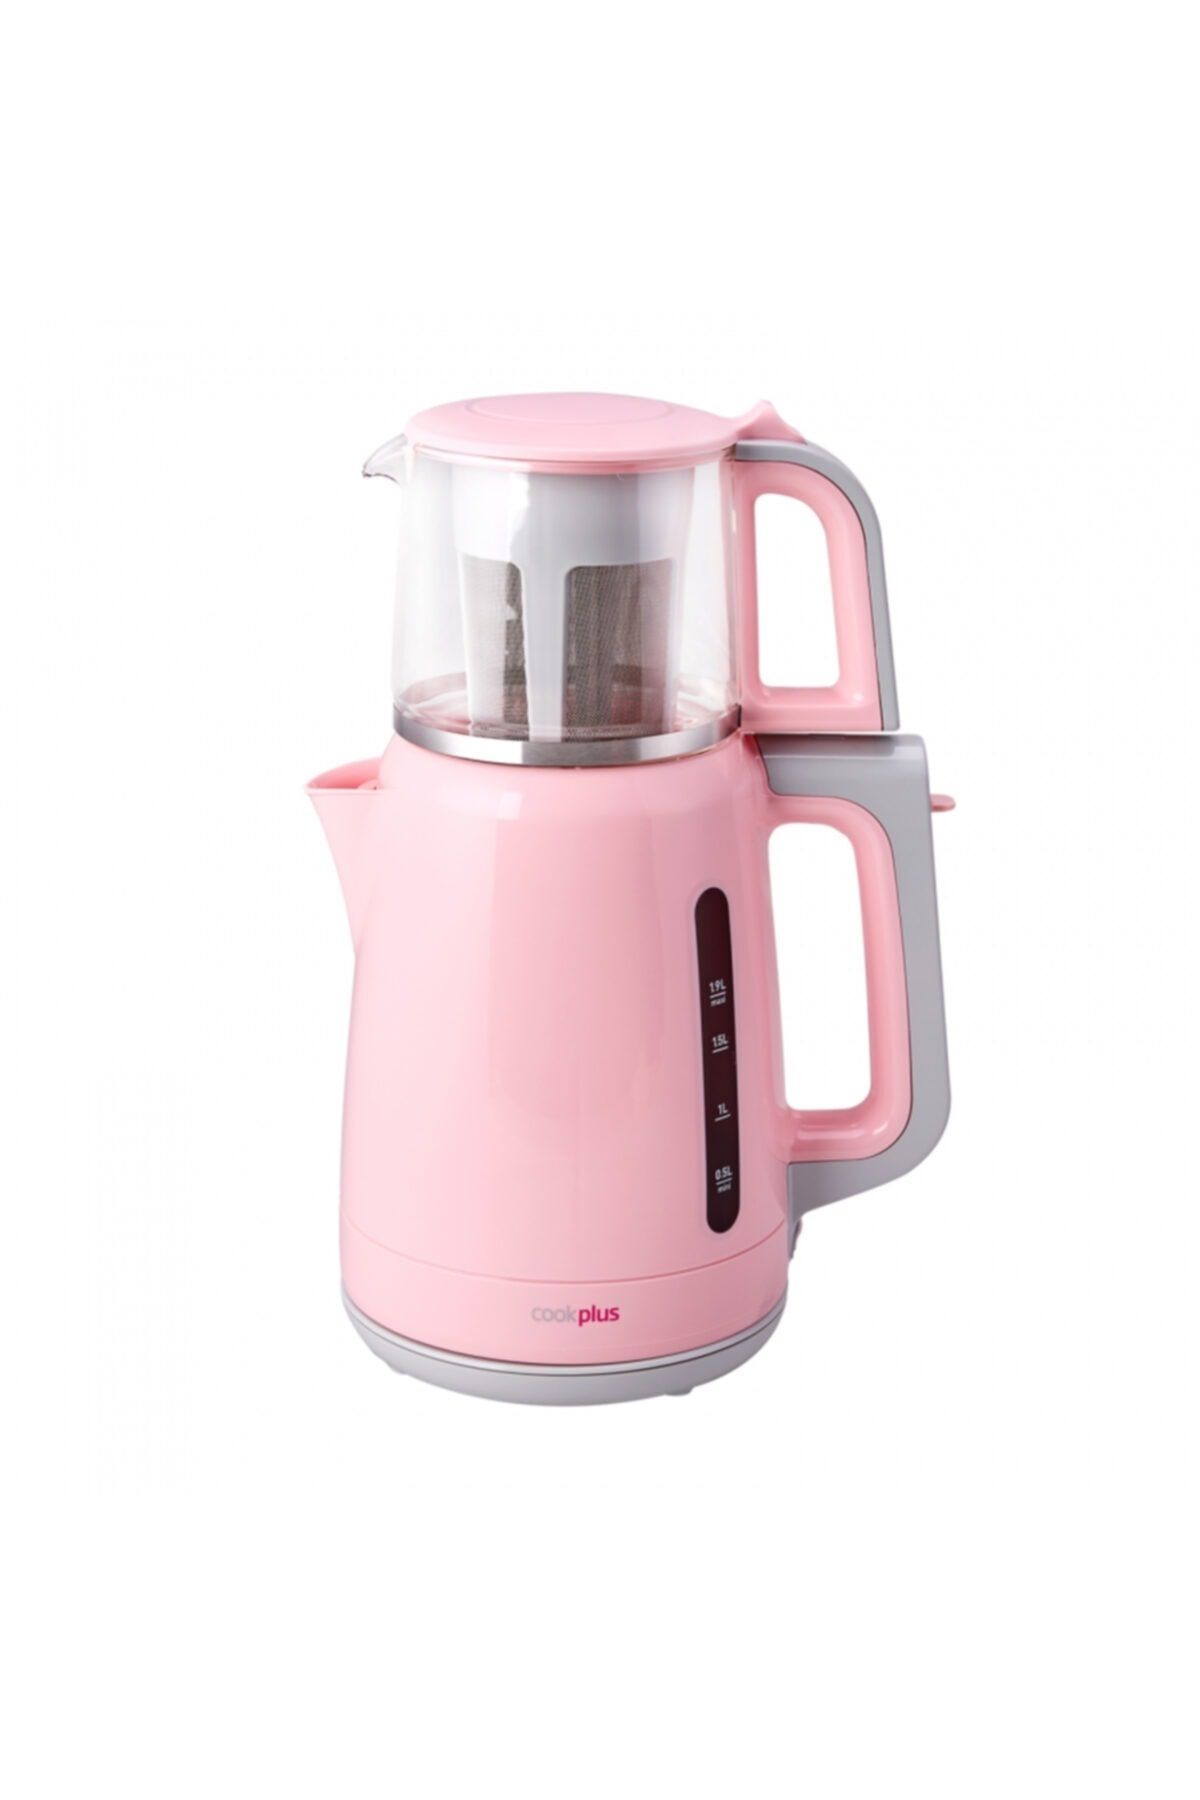 Cookplus Yeni 1501 Enerji Tasarruflu Kettle Çay Makinesi Pink